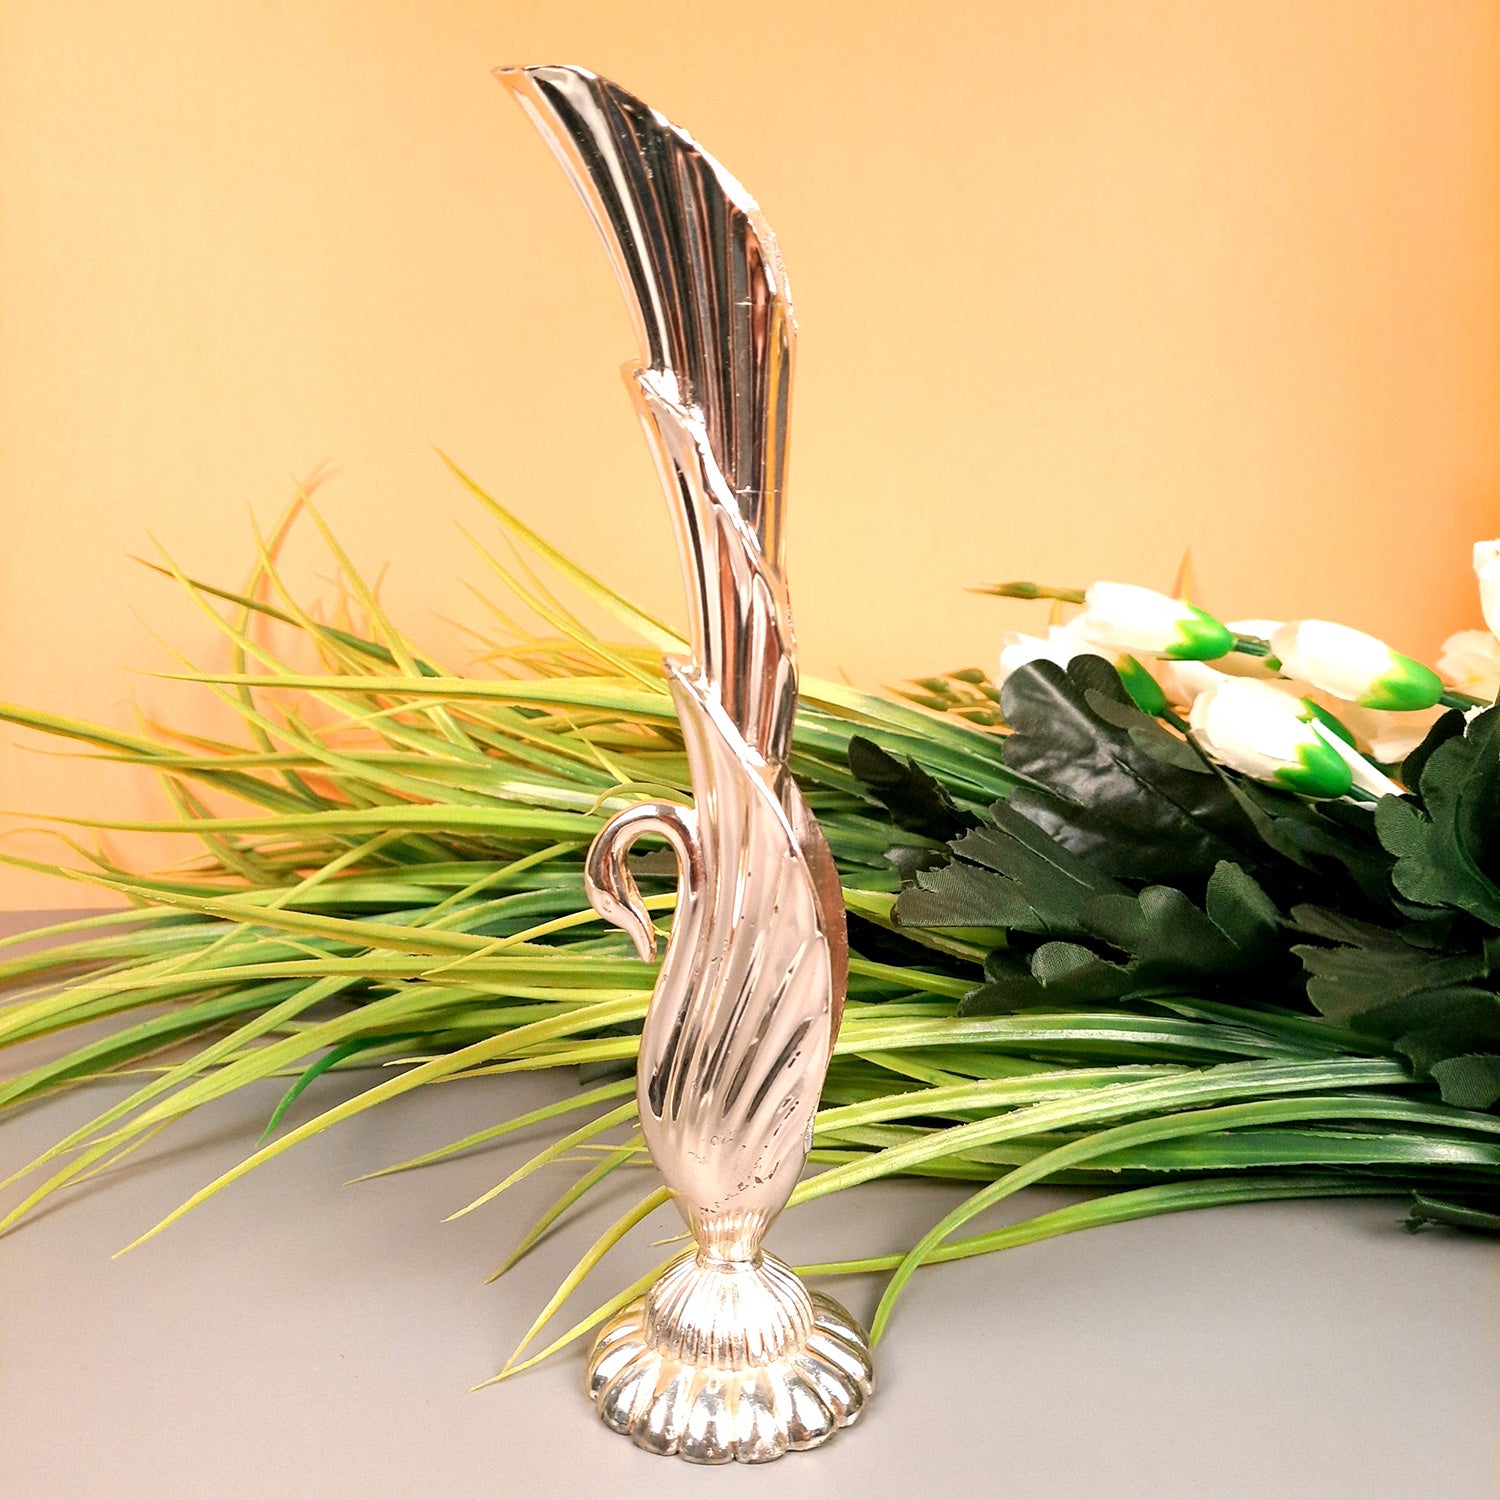 Flower Pot | Decorative Vase Small - Swan Design - For Home, Table, Living Room, Bedroom Decor - 9 Inch - Apkamart